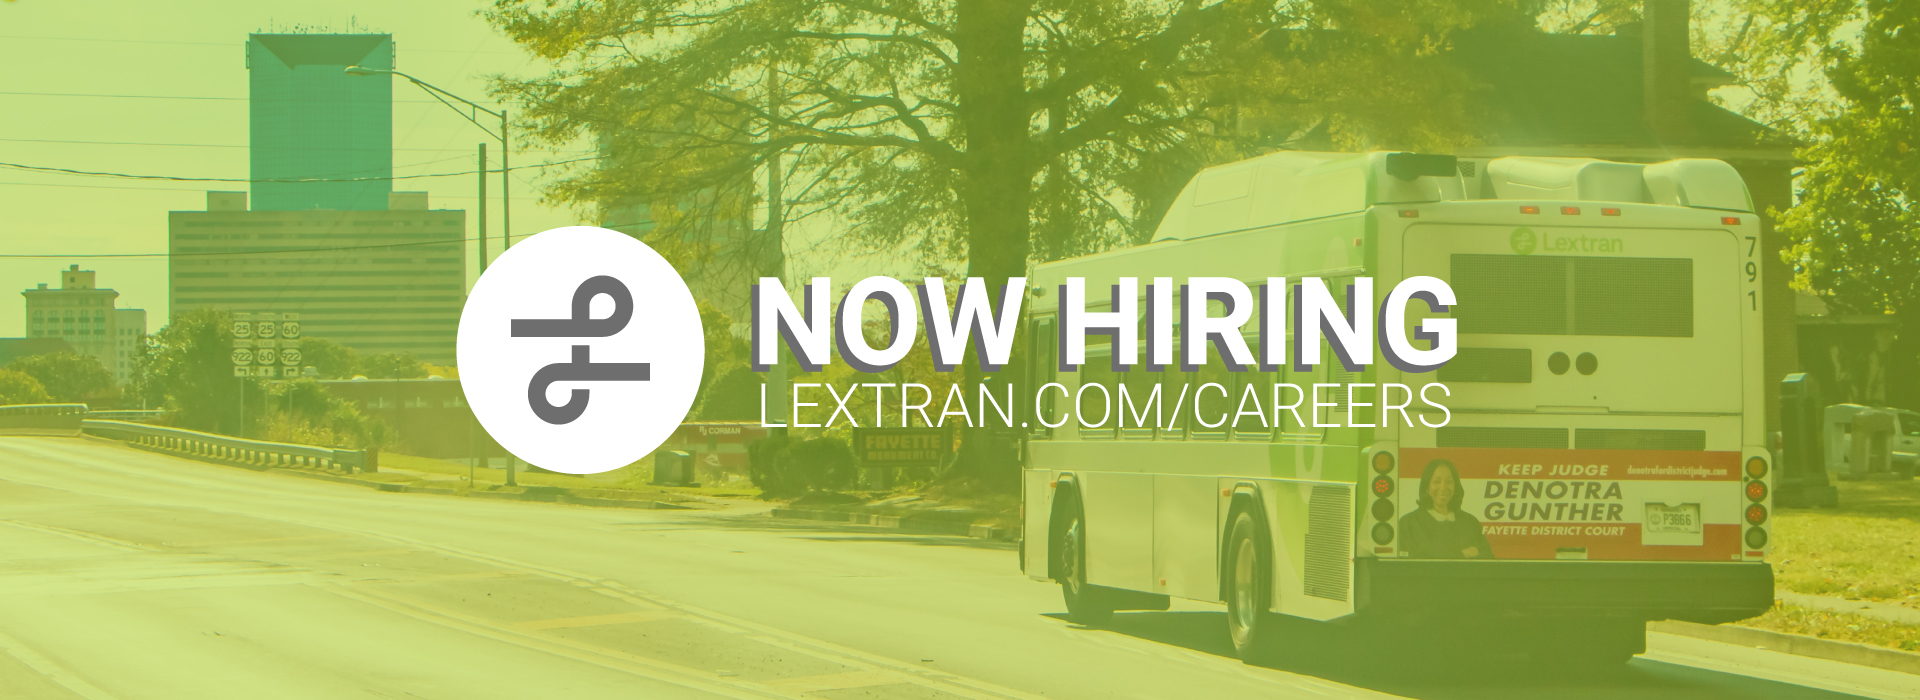 Now Hiring Lextran.com/Careers